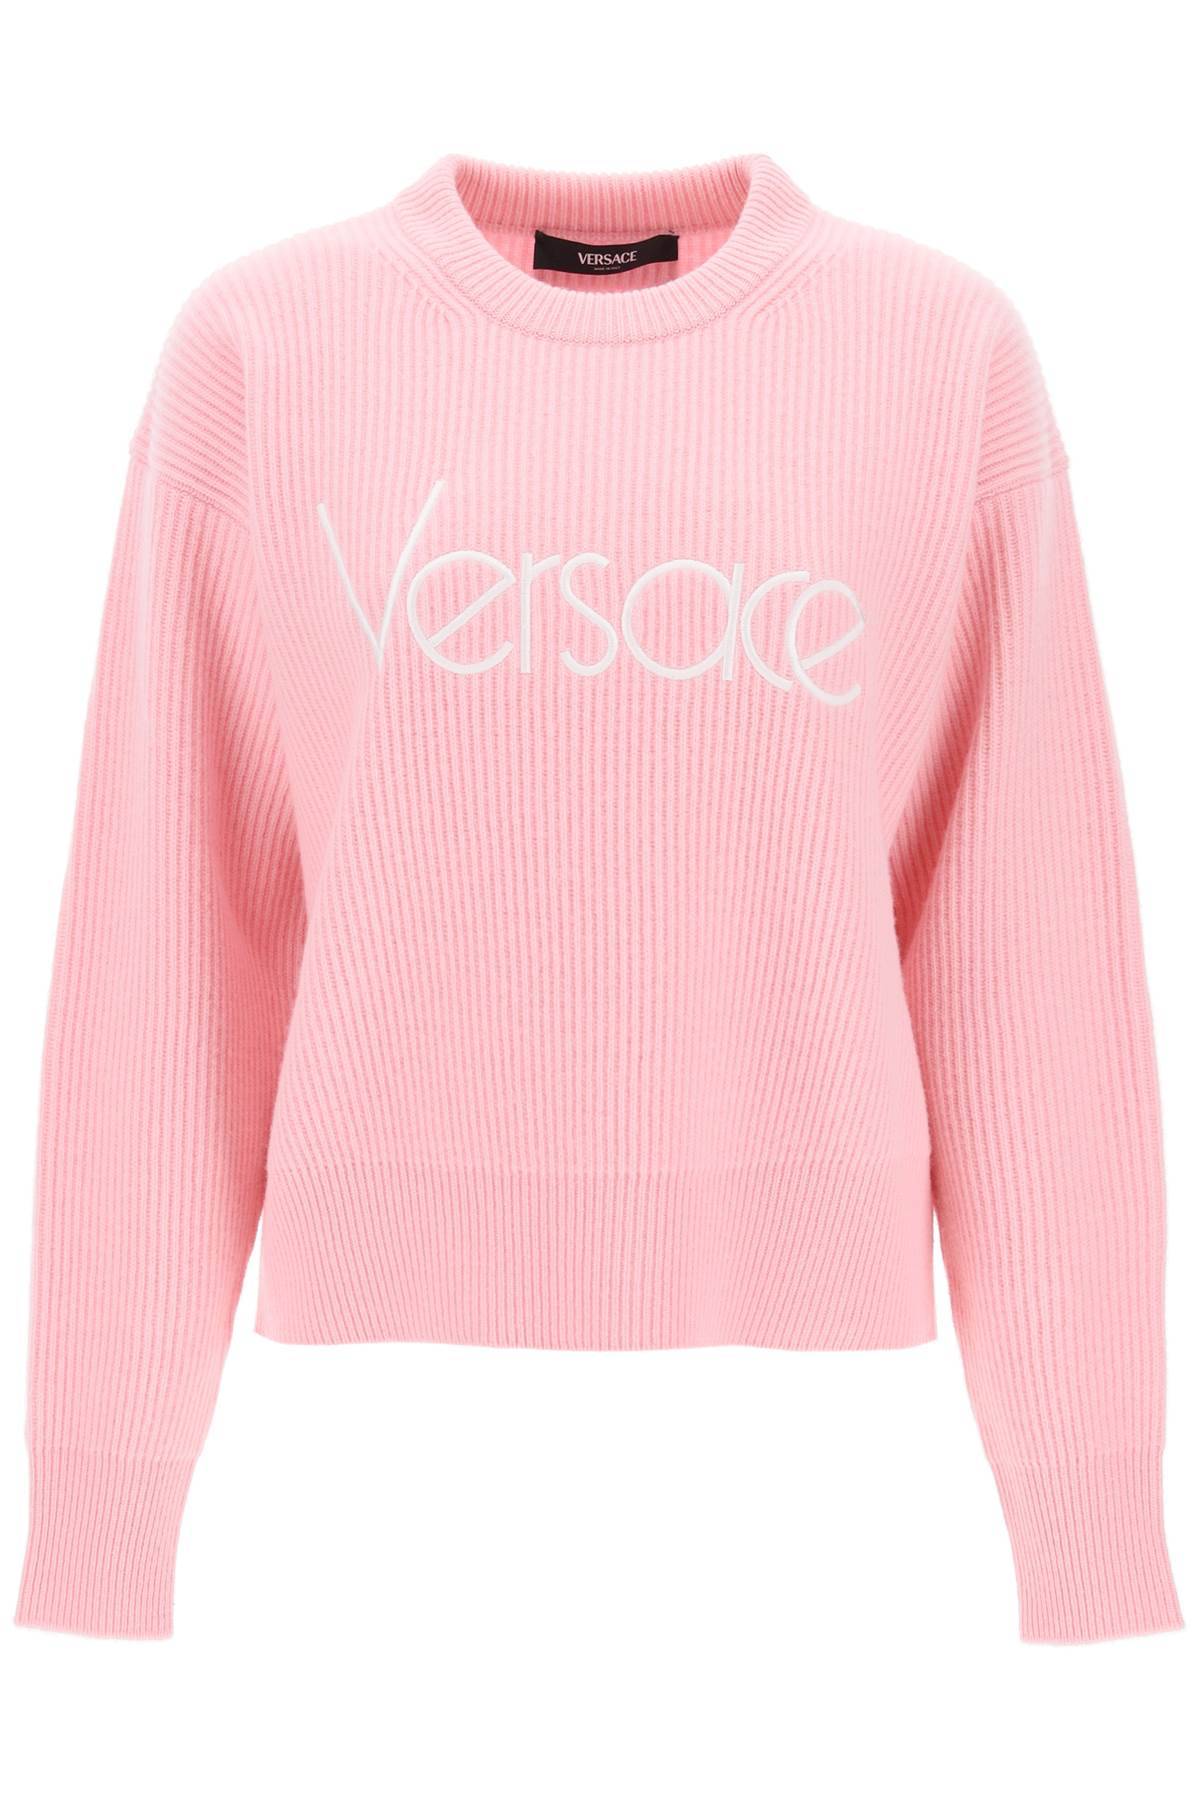 Versace VERSACE 1978 re-edition wool sweater